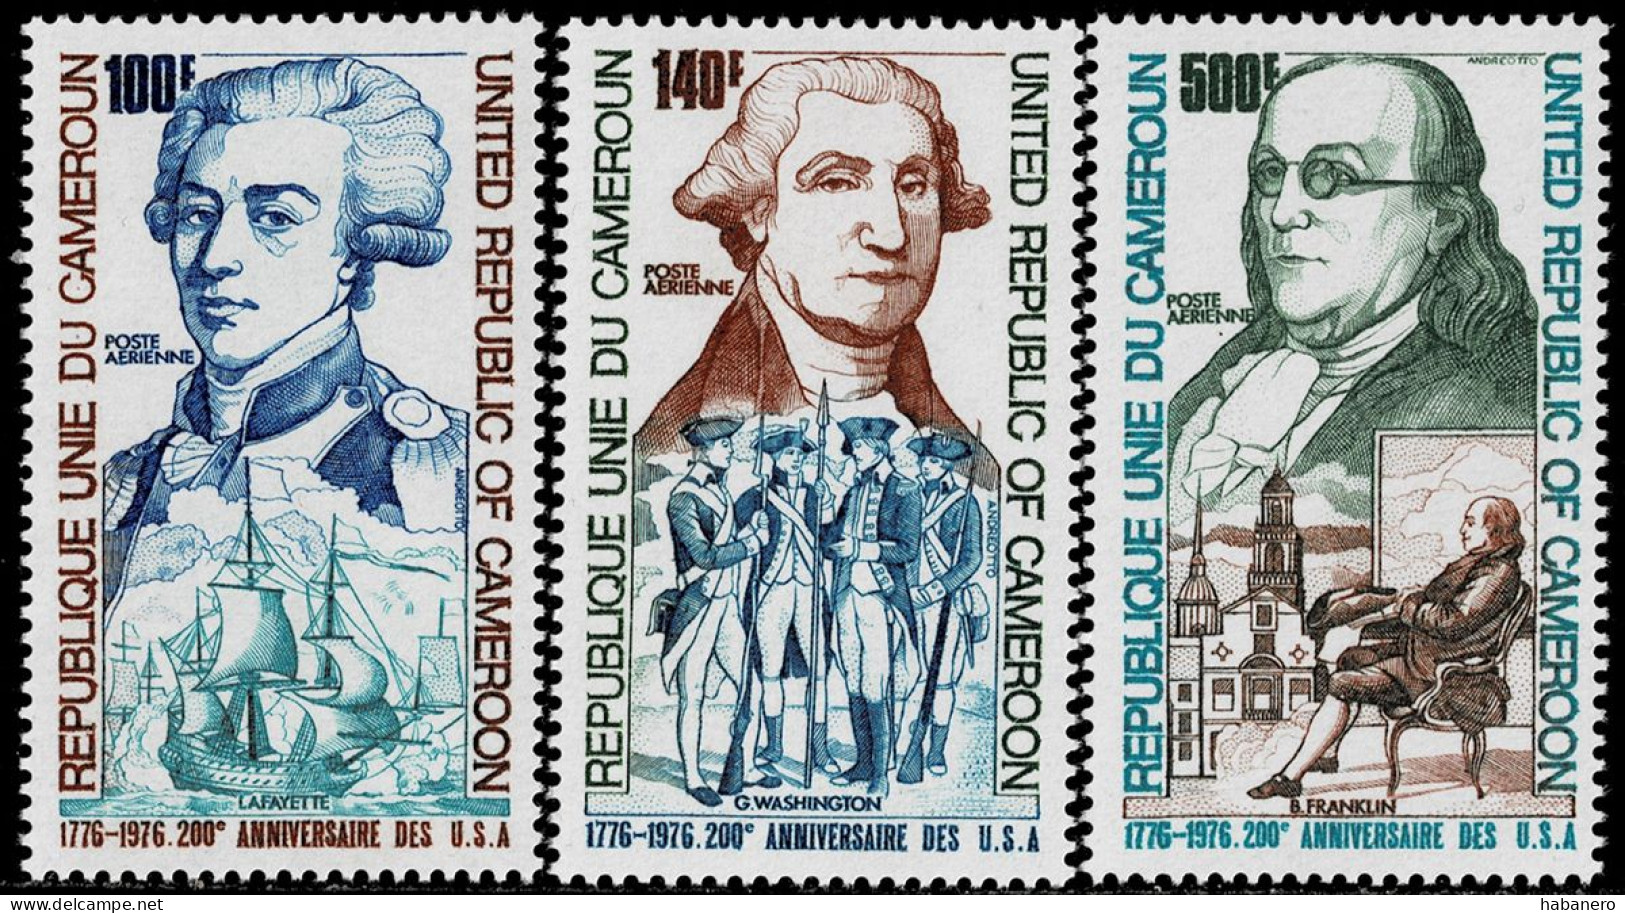 CAMEROON 1975 Mi 809-811 BICENTENARY OF AMERICAN REVOLUTION MINT STAMPS ** - Unabhängigkeit USA